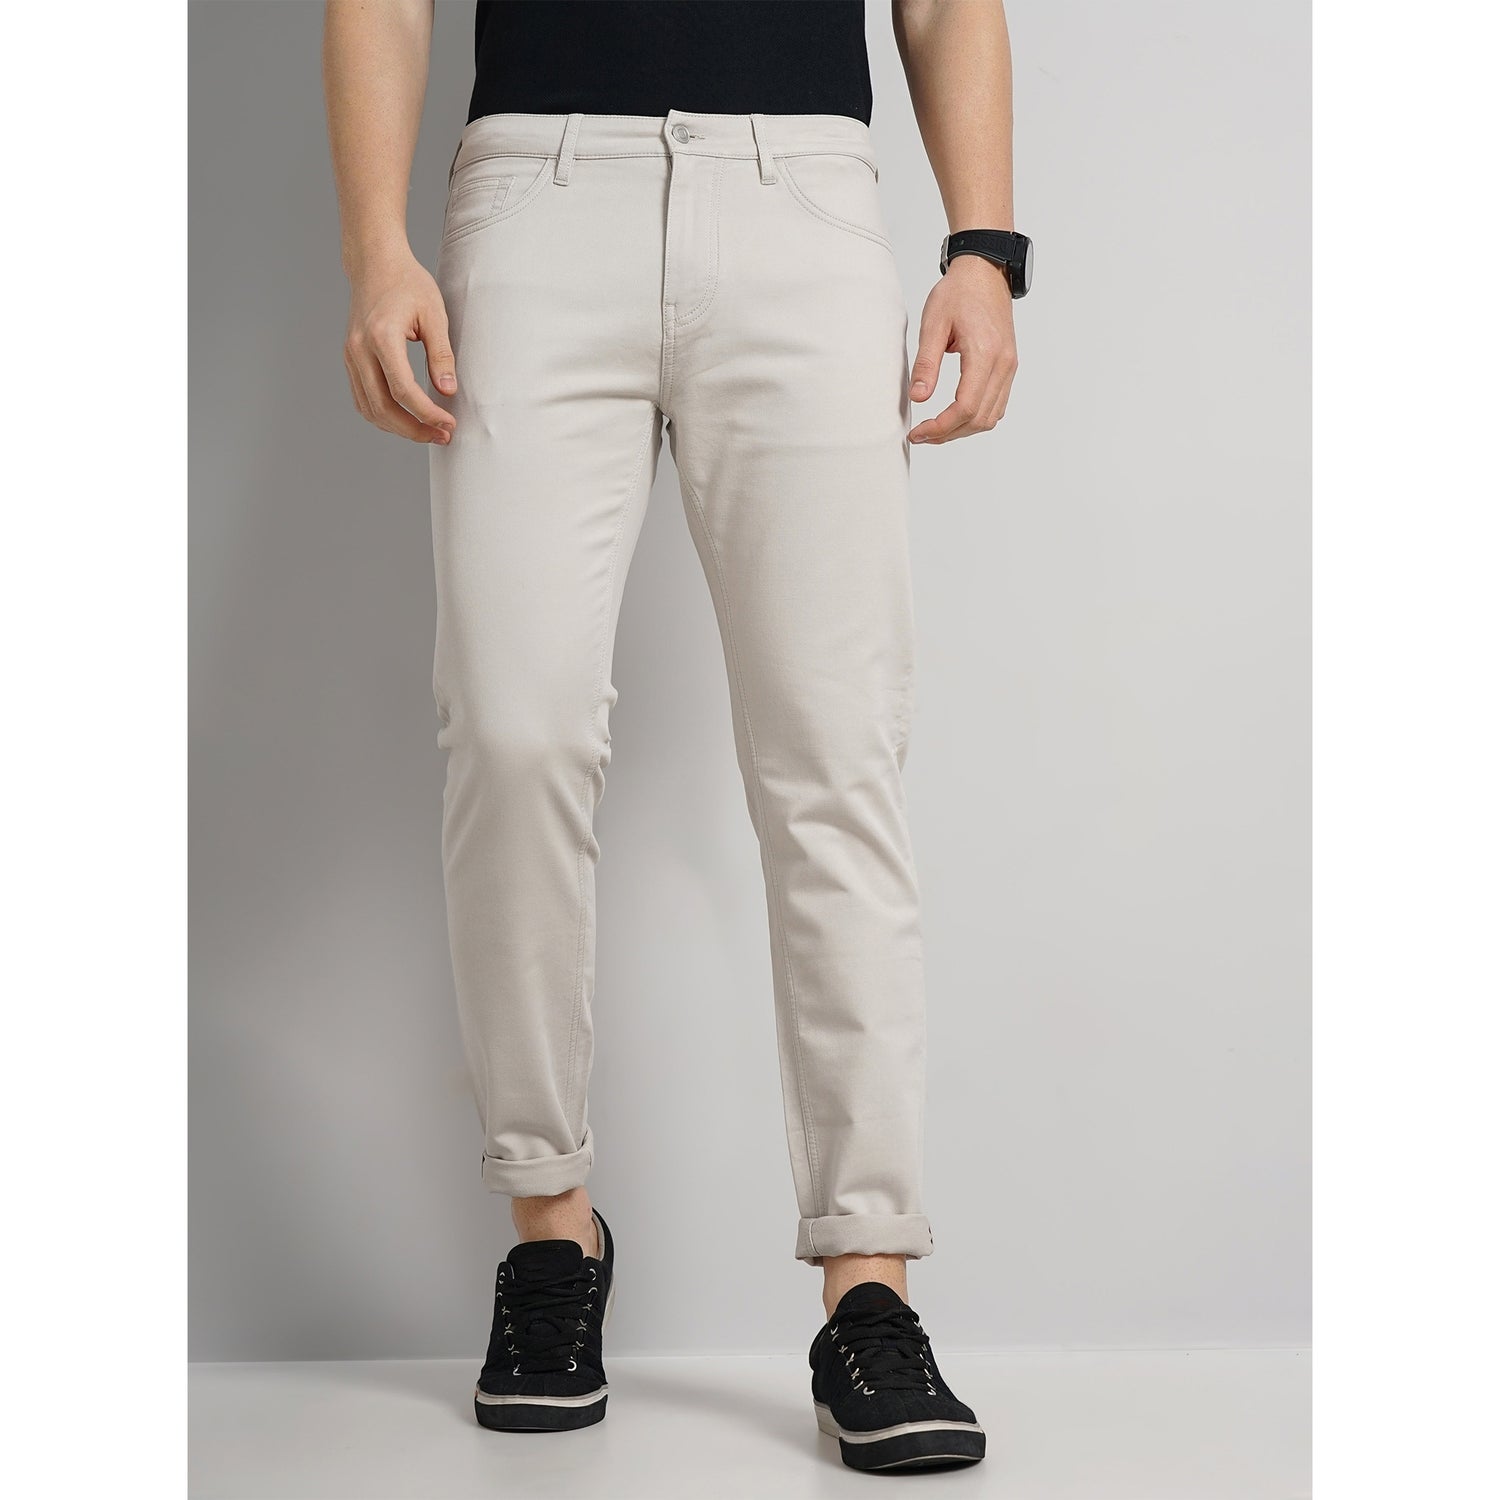 Men Beige Solid Slim Fit Dobby Cotton Pants Casual Trousers (GOFIVE)